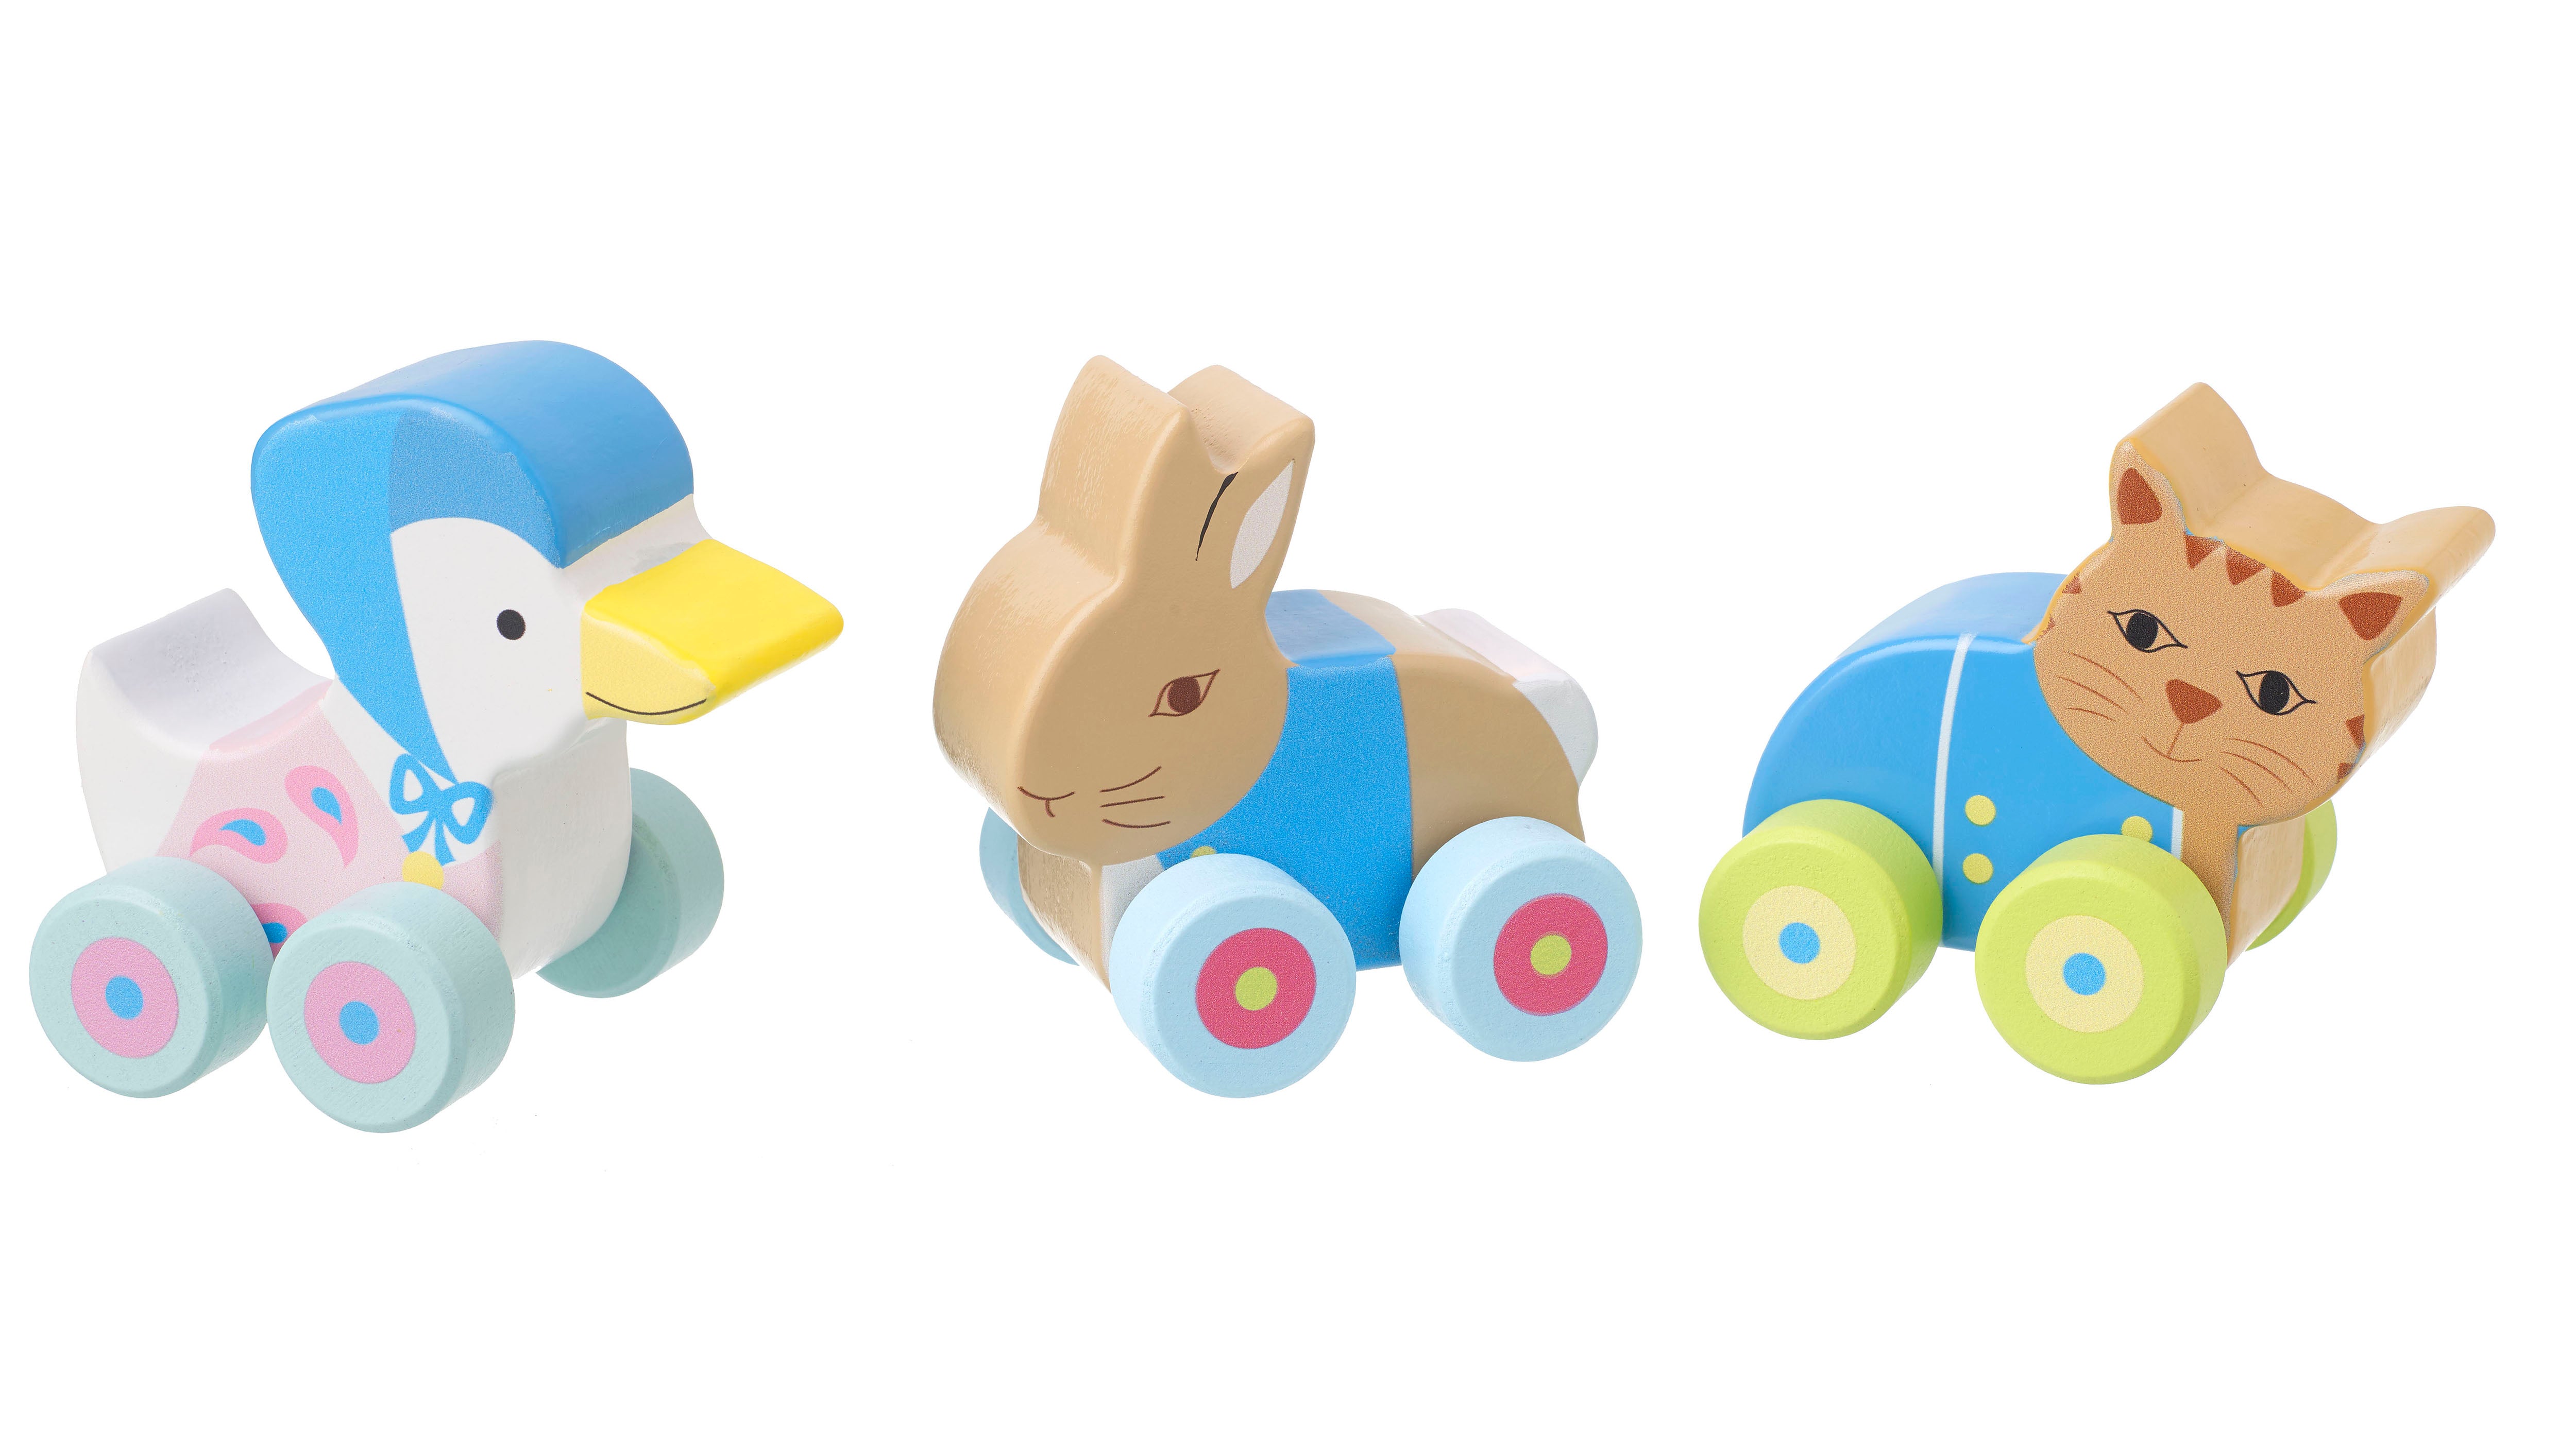 Peter Rabbit™ First push toys